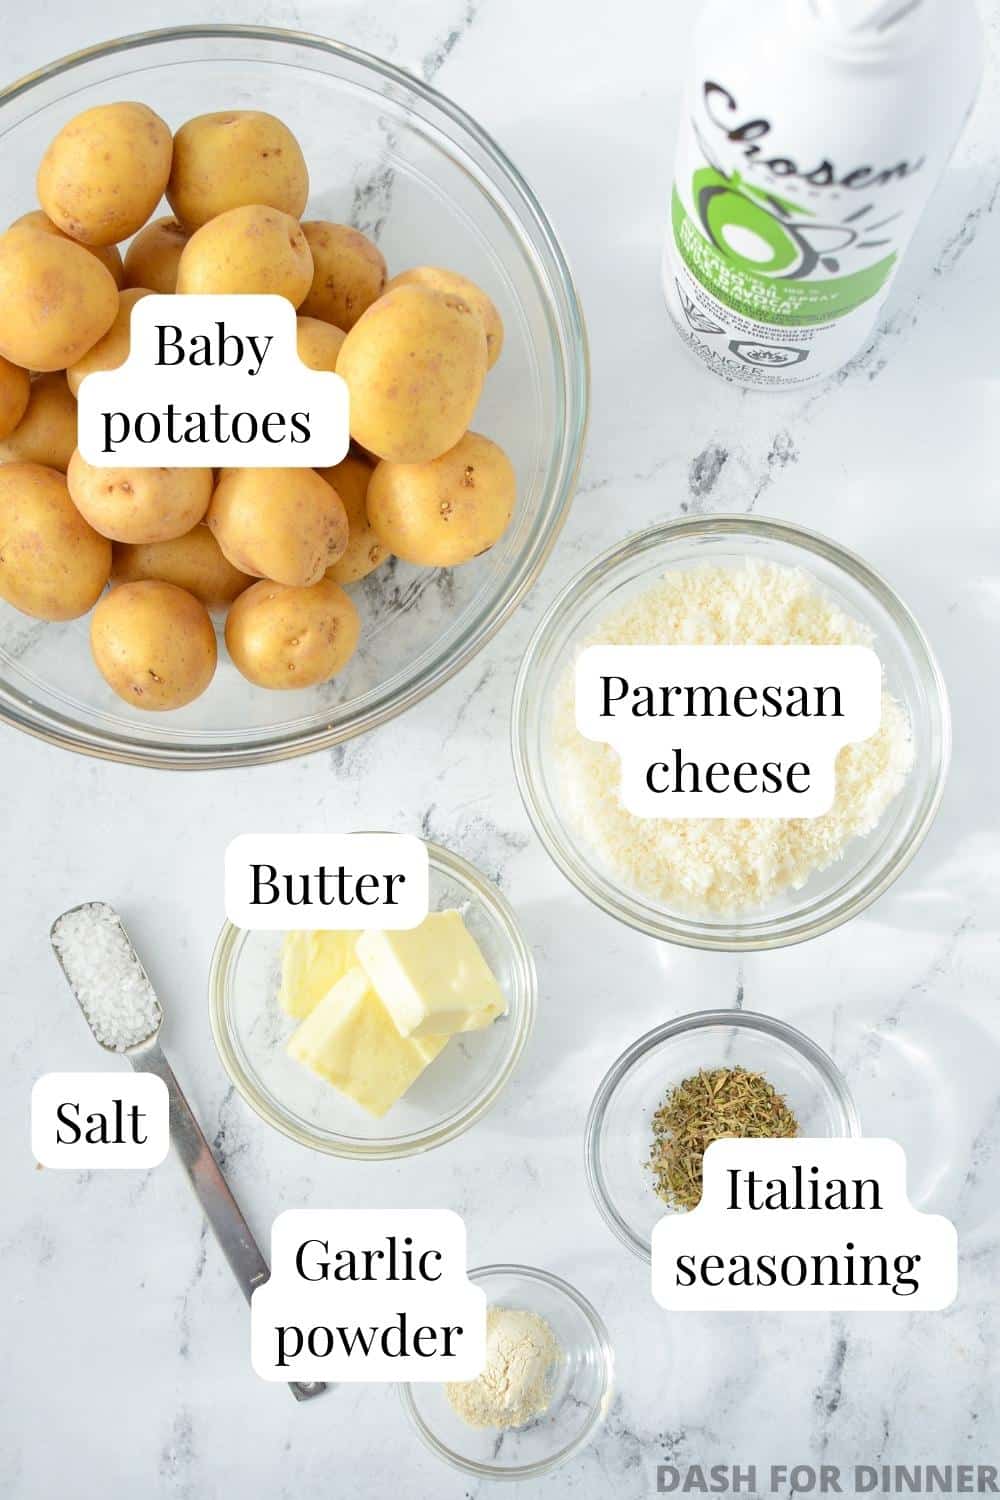 The ingredients needed to make parmesan crusted baby potatoes: baby potatoes, parmesan cheese, butter, Italian seasoning, garlic powder, salt, and cooking spray.